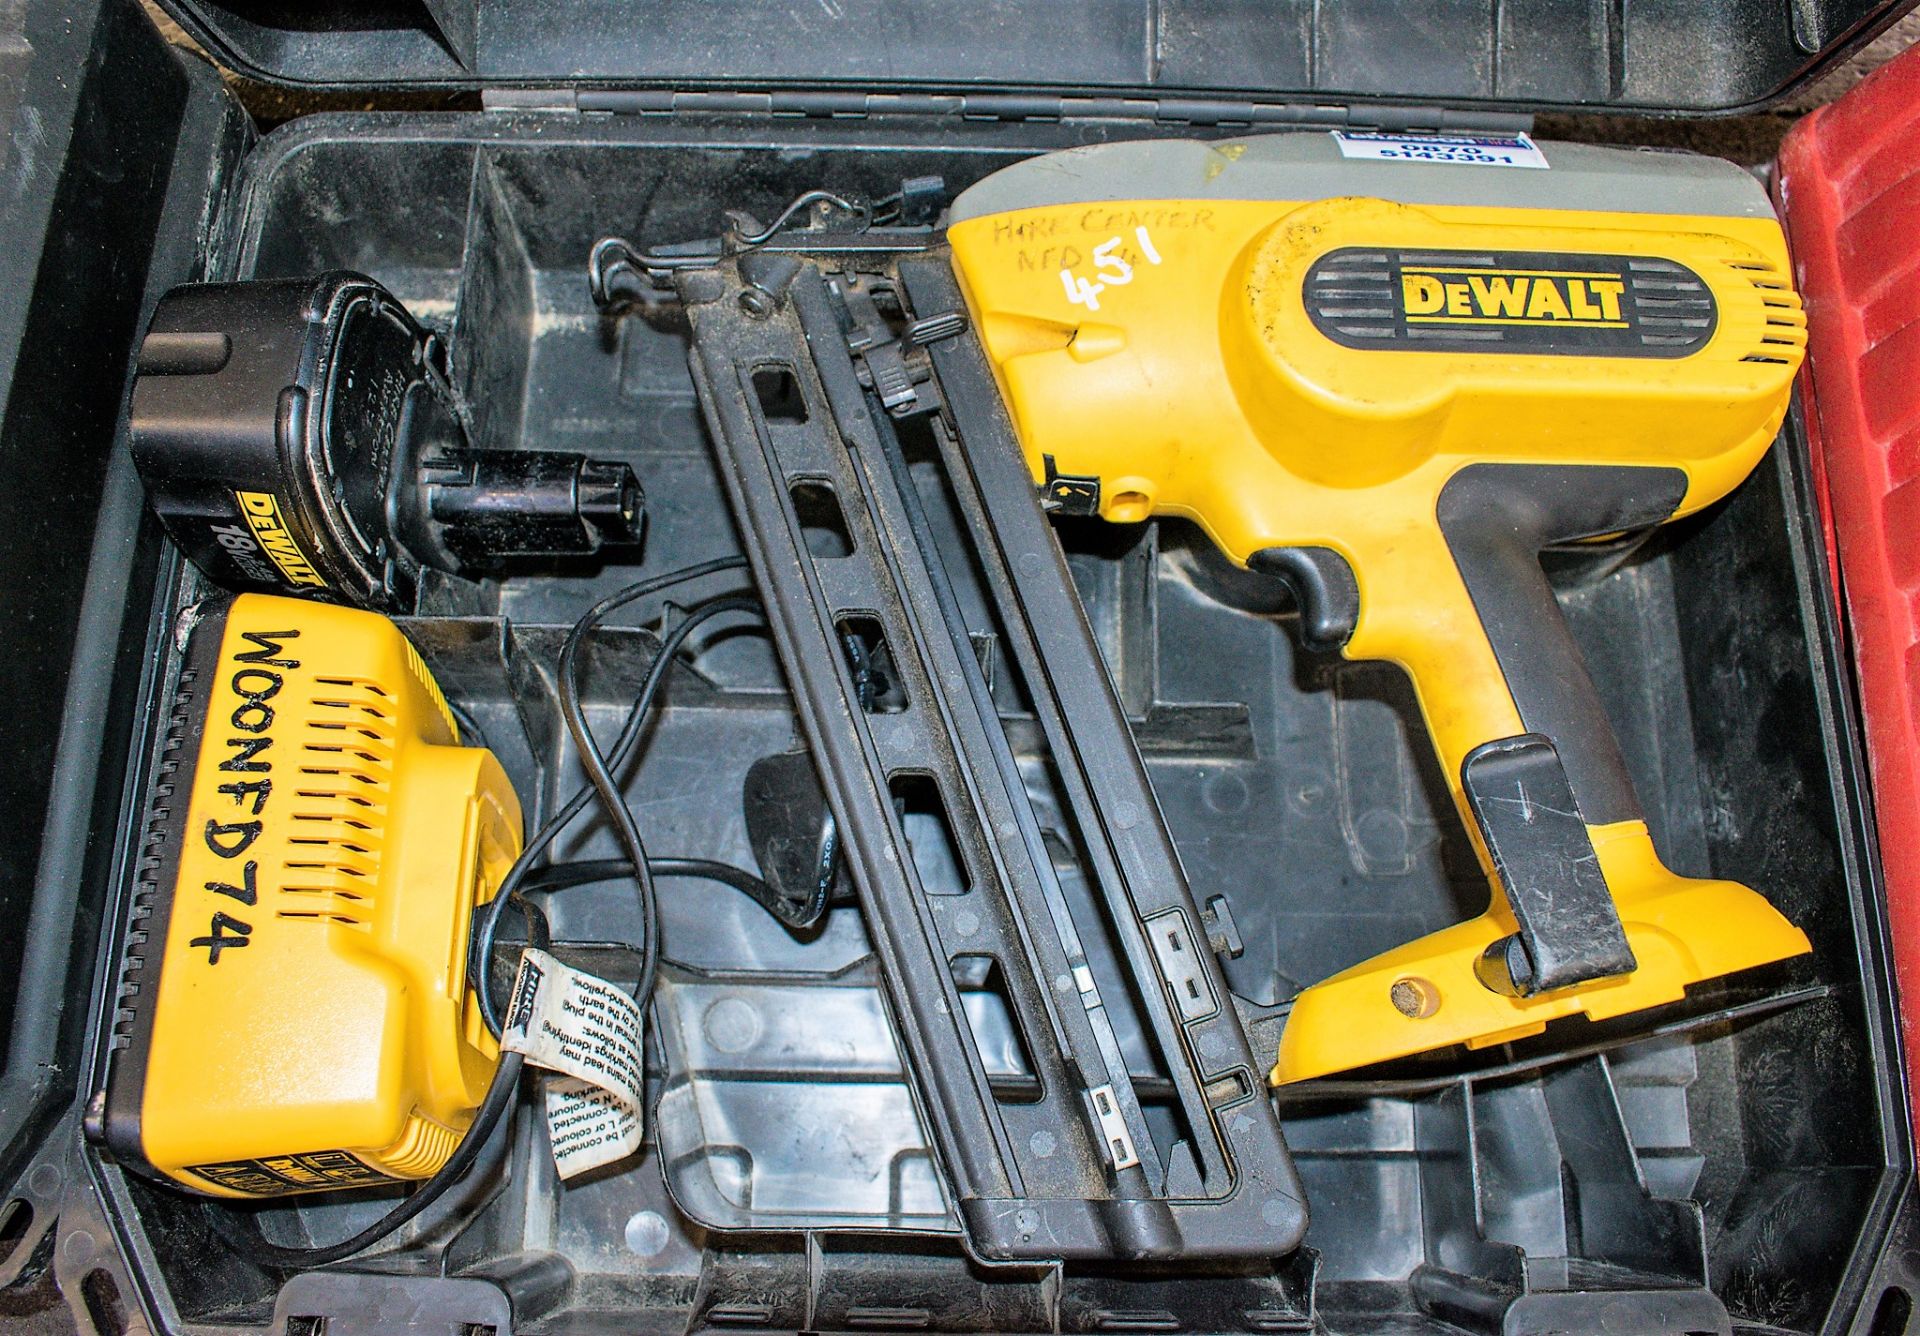 Dewalt 18v cordless nail gun c/w battery, charger & carry case